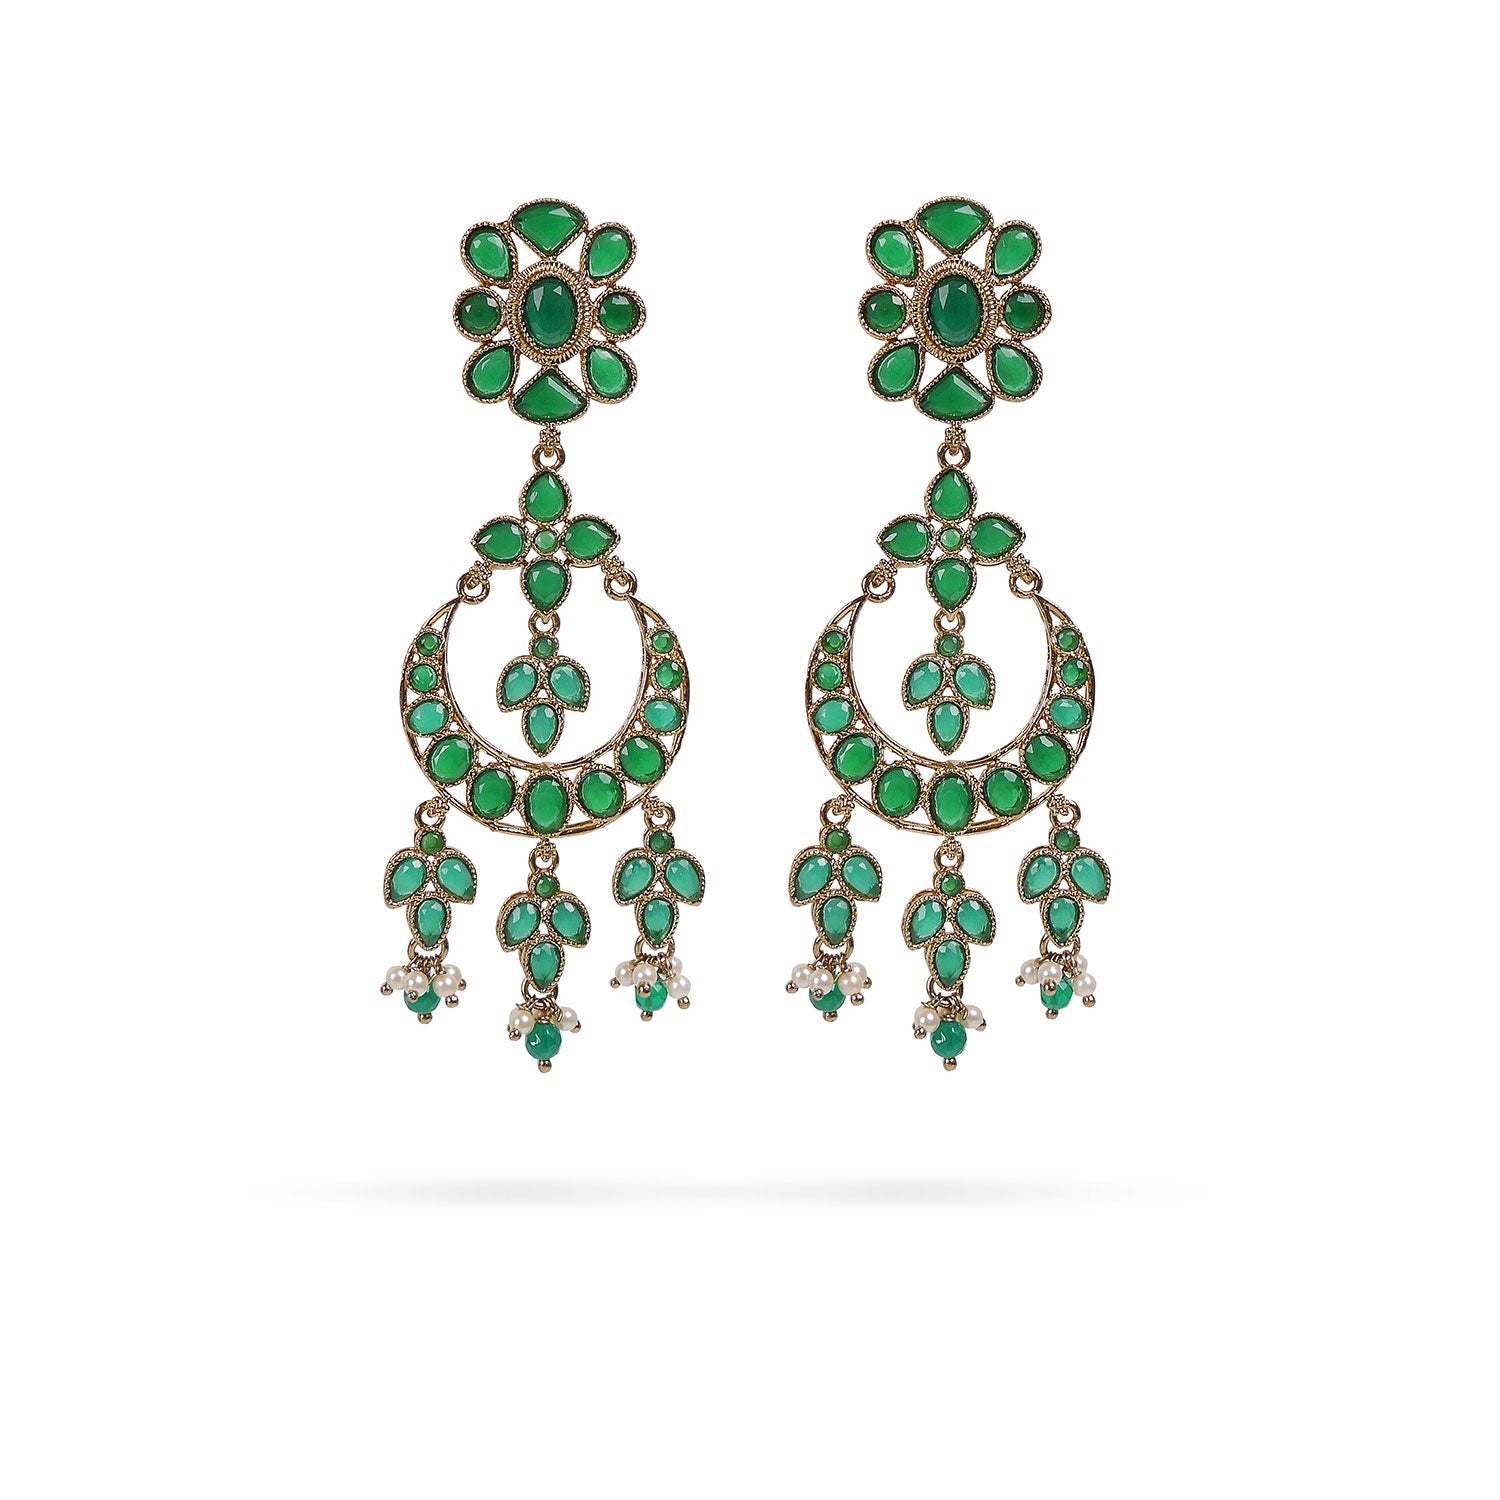 Mariana Long Crystal Earrings in All Green